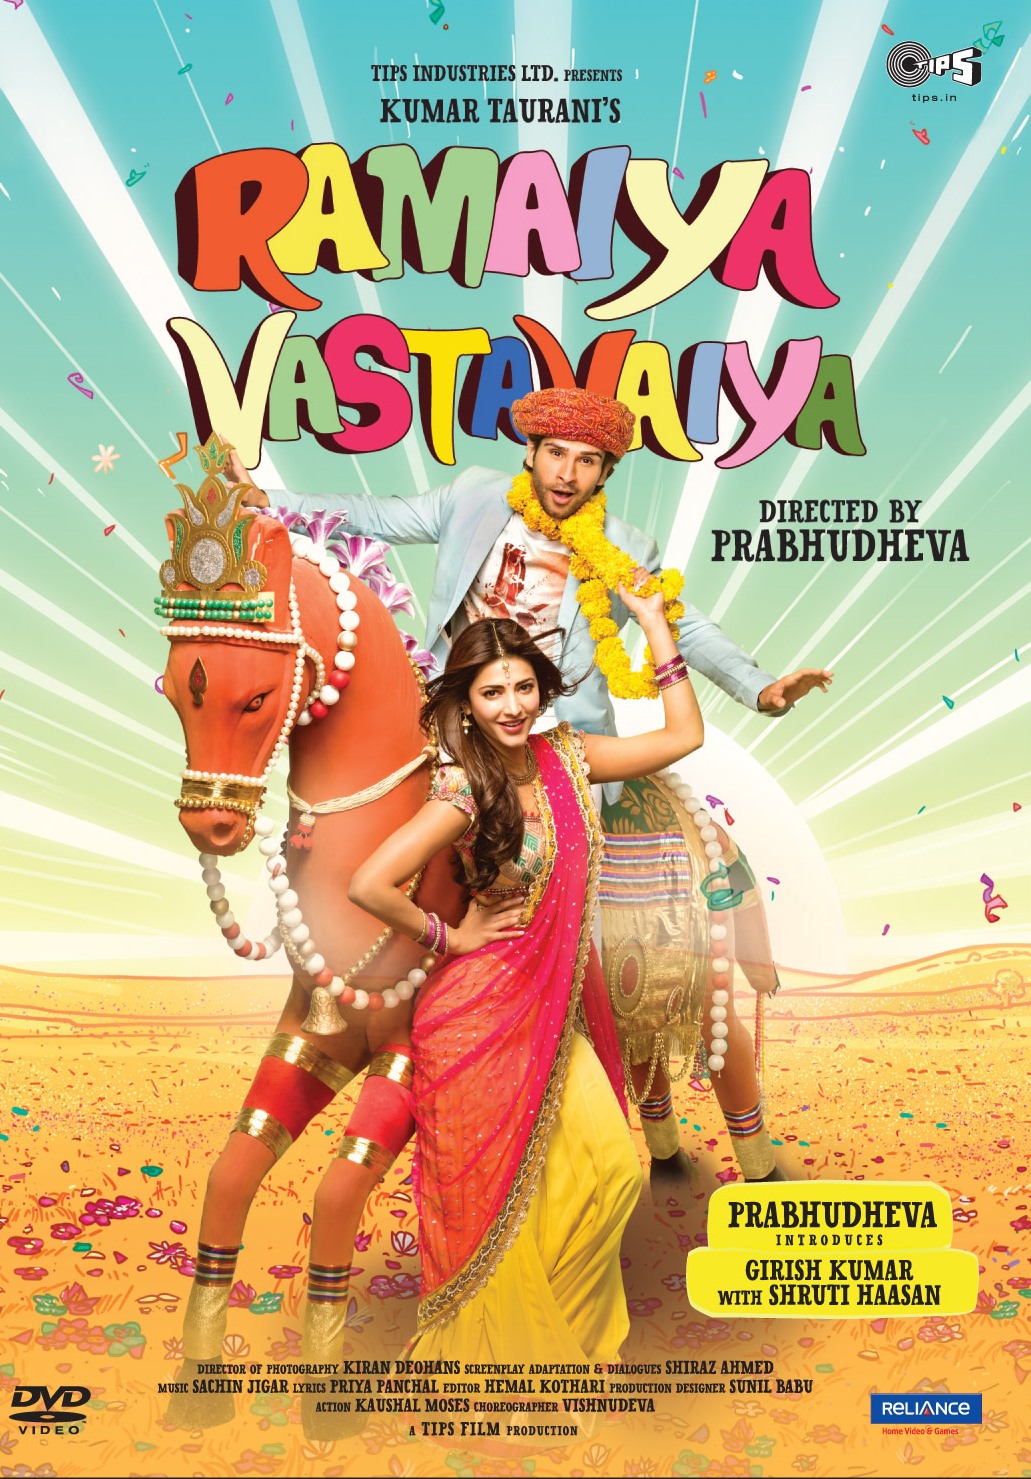 Ramaiya Vastavaiya (2013) Watch Full Movie Free Online - HindiMovies.to